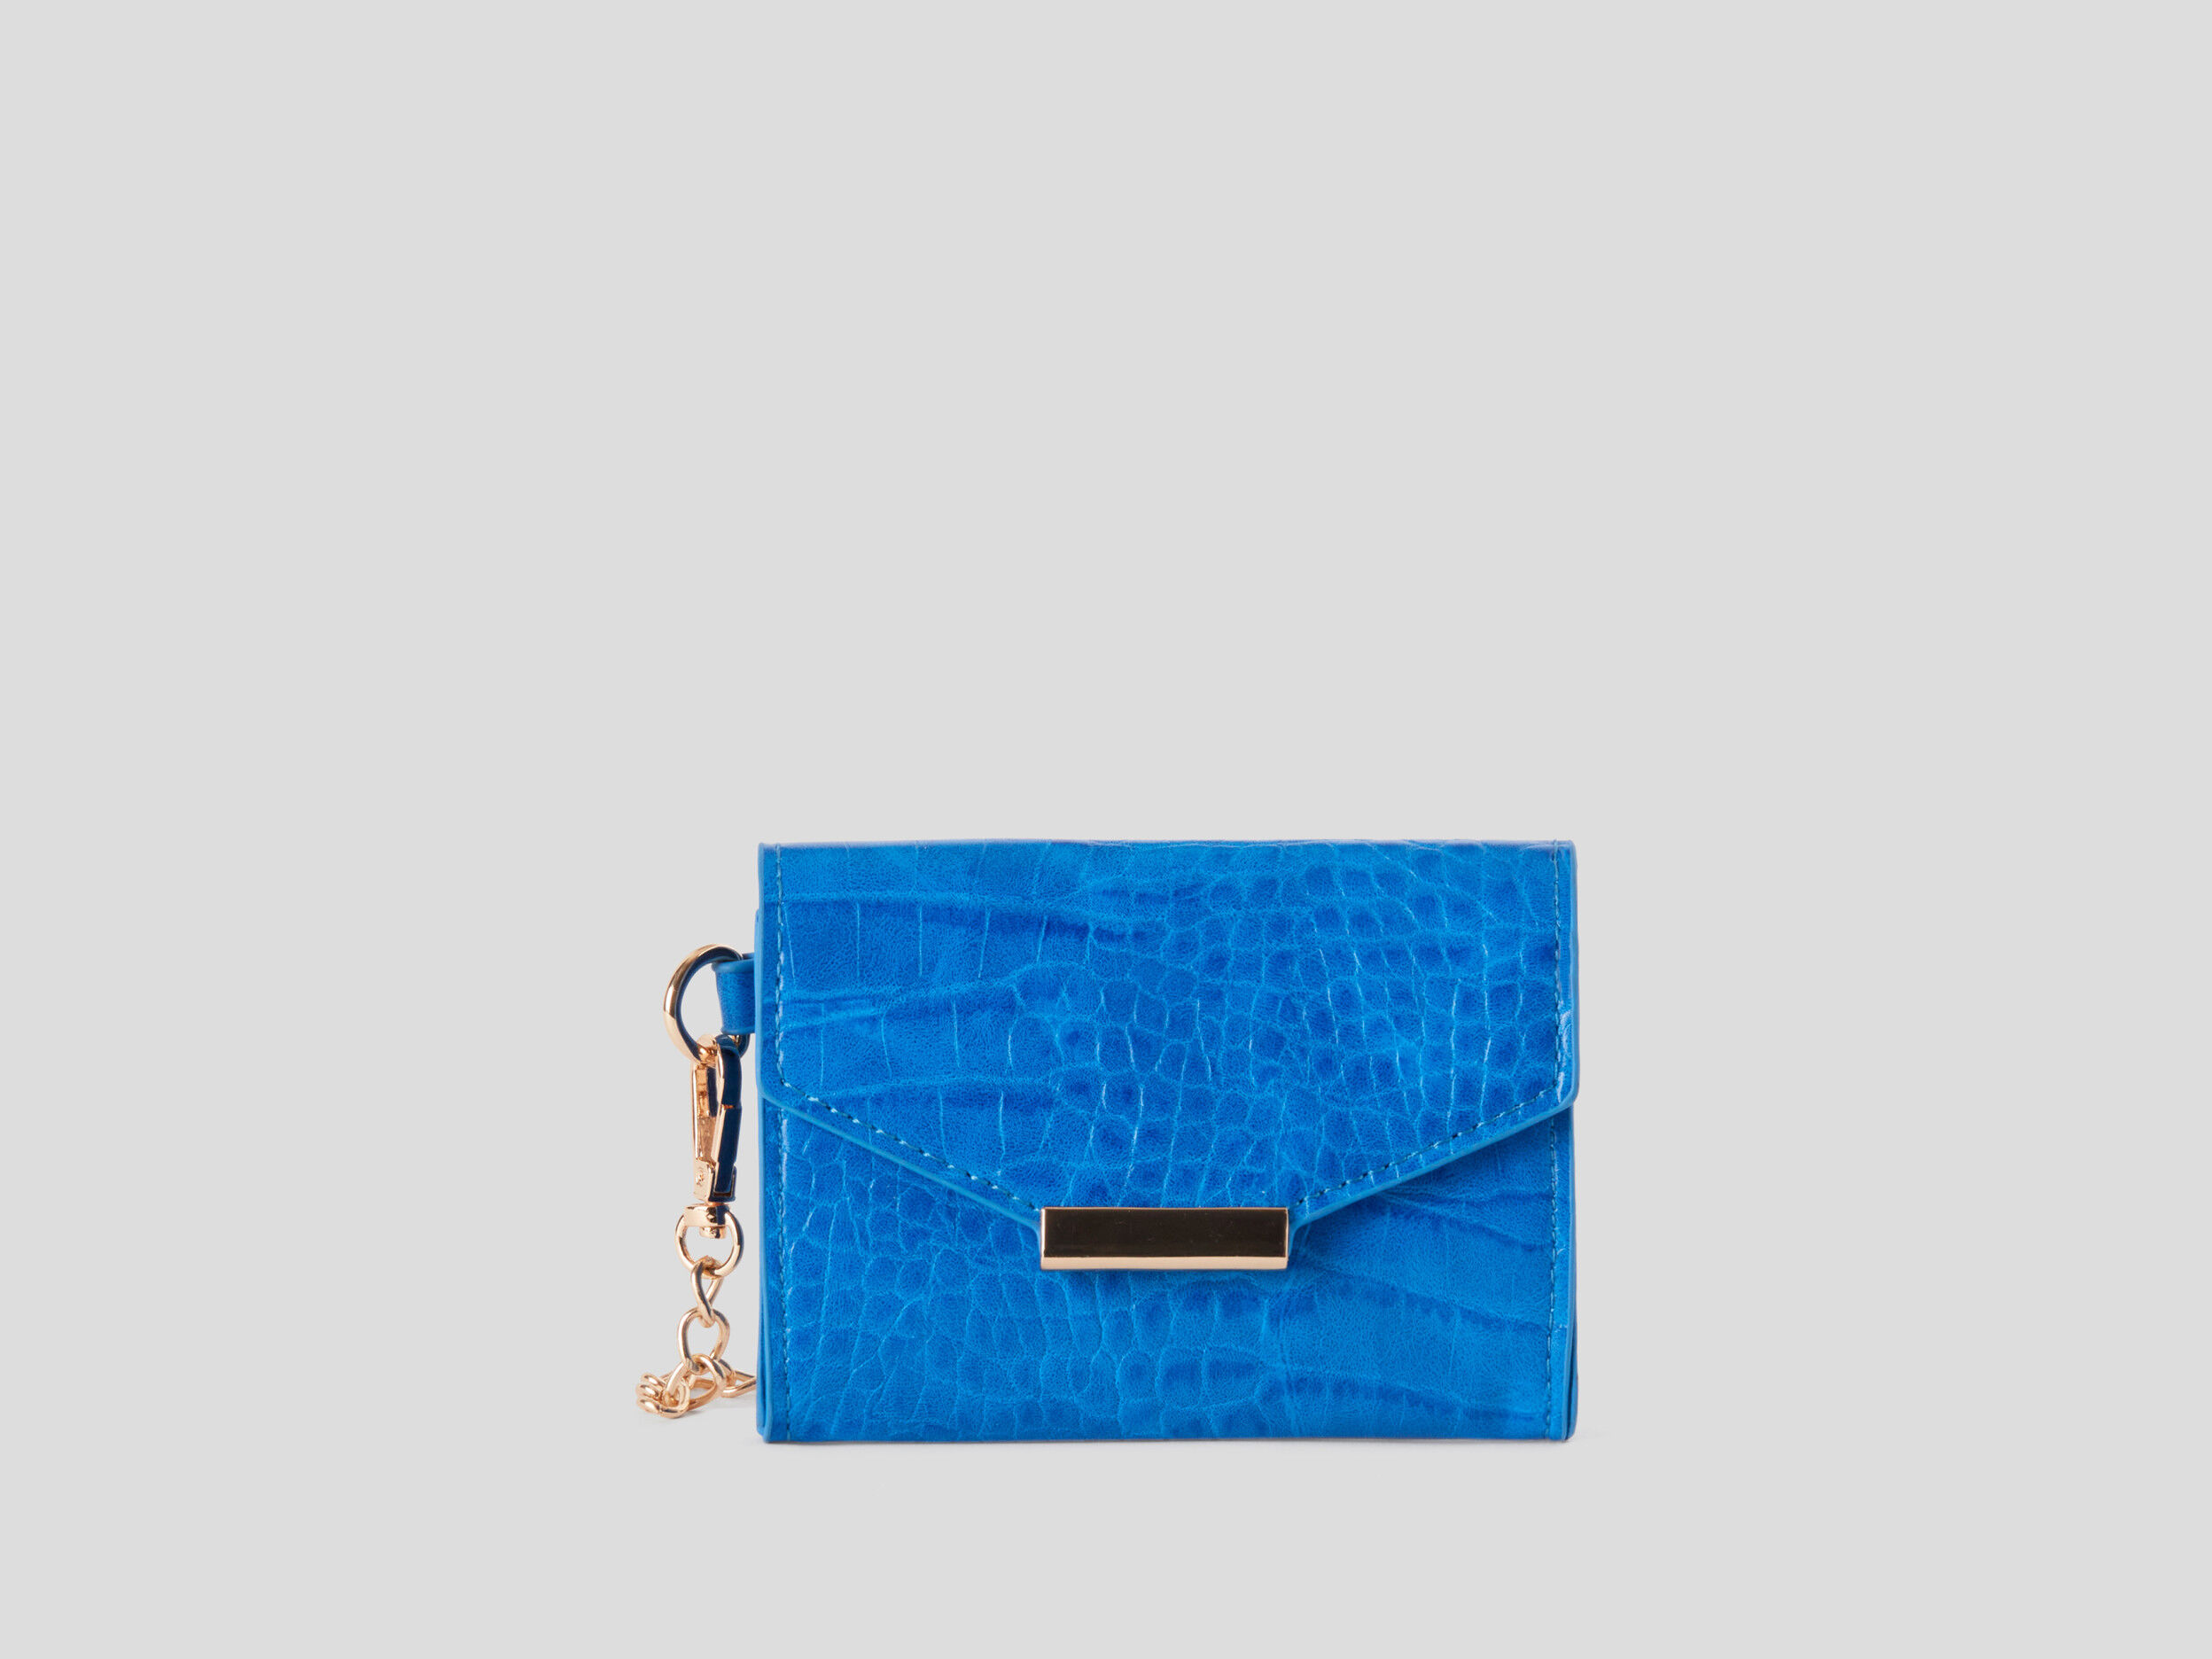 Buy Glossy Vegan Leather Structured Square Crocodile Print Medium Satchel Purse  Tote Handbag (Crocodile Print - Light-Blue) at Amazon.in